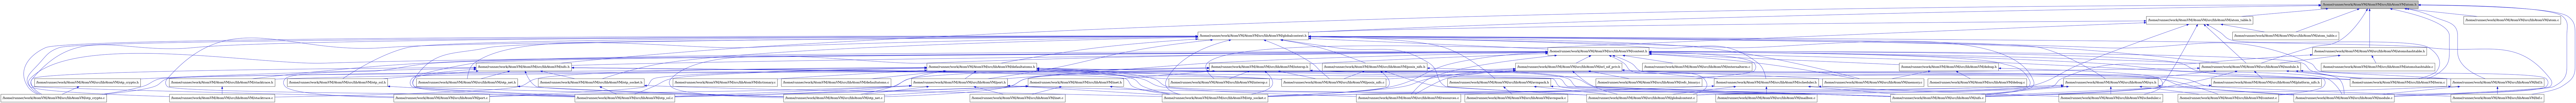 digraph {
    graph [bgcolor="#00000000"]
    node [shape=rectangle style=filled fillcolor="#FFFFFF" font=Helvetica padding=2]
    edge [color="#1414CE"]
    "13" [label="/home/runner/work/AtomVM/AtomVM/src/libAtomVM/bif.c" tooltip="/home/runner/work/AtomVM/AtomVM/src/libAtomVM/bif.c"]
    "49" [label="/home/runner/work/AtomVM/AtomVM/src/libAtomVM/dictionary.c" tooltip="/home/runner/work/AtomVM/AtomVM/src/libAtomVM/dictionary.c"]
    "12" [label="/home/runner/work/AtomVM/AtomVM/src/libAtomVM/bif.h" tooltip="/home/runner/work/AtomVM/AtomVM/src/libAtomVM/bif.h"]
    "34" [label="/home/runner/work/AtomVM/AtomVM/src/libAtomVM/platform_nifs.h" tooltip="/home/runner/work/AtomVM/AtomVM/src/libAtomVM/platform_nifs.h"]
    "2" [label="/home/runner/work/AtomVM/AtomVM/src/libAtomVM/atom.c" tooltip="/home/runner/work/AtomVM/AtomVM/src/libAtomVM/atom.c"]
    "22" [label="/home/runner/work/AtomVM/AtomVM/src/libAtomVM/posix_nifs.c" tooltip="/home/runner/work/AtomVM/AtomVM/src/libAtomVM/posix_nifs.c"]
    "1" [label="/home/runner/work/AtomVM/AtomVM/src/libAtomVM/atom.h" tooltip="/home/runner/work/AtomVM/AtomVM/src/libAtomVM/atom.h" fillcolor="#BFBFBF"]
    "50" [label="/home/runner/work/AtomVM/AtomVM/src/libAtomVM/posix_nifs.h" tooltip="/home/runner/work/AtomVM/AtomVM/src/libAtomVM/posix_nifs.h"]
    "48" [label="/home/runner/work/AtomVM/AtomVM/src/libAtomVM/defaultatoms.c" tooltip="/home/runner/work/AtomVM/AtomVM/src/libAtomVM/defaultatoms.c"]
    "47" [label="/home/runner/work/AtomVM/AtomVM/src/libAtomVM/defaultatoms.h" tooltip="/home/runner/work/AtomVM/AtomVM/src/libAtomVM/defaultatoms.h"]
    "28" [label="/home/runner/work/AtomVM/AtomVM/src/libAtomVM/inet.c" tooltip="/home/runner/work/AtomVM/AtomVM/src/libAtomVM/inet.c"]
    "27" [label="/home/runner/work/AtomVM/AtomVM/src/libAtomVM/inet.h" tooltip="/home/runner/work/AtomVM/AtomVM/src/libAtomVM/inet.h"]
    "18" [label="/home/runner/work/AtomVM/AtomVM/src/libAtomVM/scheduler.c" tooltip="/home/runner/work/AtomVM/AtomVM/src/libAtomVM/scheduler.c"]
    "45" [label="/home/runner/work/AtomVM/AtomVM/src/libAtomVM/scheduler.h" tooltip="/home/runner/work/AtomVM/AtomVM/src/libAtomVM/scheduler.h"]
    "10" [label="/home/runner/work/AtomVM/AtomVM/src/libAtomVM/context.c" tooltip="/home/runner/work/AtomVM/AtomVM/src/libAtomVM/context.c"]
    "11" [label="/home/runner/work/AtomVM/AtomVM/src/libAtomVM/context.h" tooltip="/home/runner/work/AtomVM/AtomVM/src/libAtomVM/context.h"]
    "43" [label="/home/runner/work/AtomVM/AtomVM/src/libAtomVM/port.c" tooltip="/home/runner/work/AtomVM/AtomVM/src/libAtomVM/port.c"]
    "44" [label="/home/runner/work/AtomVM/AtomVM/src/libAtomVM/port.h" tooltip="/home/runner/work/AtomVM/AtomVM/src/libAtomVM/port.h"]
    "3" [label="/home/runner/work/AtomVM/AtomVM/src/libAtomVM/atom_table.c" tooltip="/home/runner/work/AtomVM/AtomVM/src/libAtomVM/atom_table.c"]
    "4" [label="/home/runner/work/AtomVM/AtomVM/src/libAtomVM/atom_table.h" tooltip="/home/runner/work/AtomVM/AtomVM/src/libAtomVM/atom_table.h"]
    "36" [label="/home/runner/work/AtomVM/AtomVM/src/libAtomVM/stacktrace.c" tooltip="/home/runner/work/AtomVM/AtomVM/src/libAtomVM/stacktrace.c"]
    "35" [label="/home/runner/work/AtomVM/AtomVM/src/libAtomVM/stacktrace.h" tooltip="/home/runner/work/AtomVM/AtomVM/src/libAtomVM/stacktrace.h"]
    "23" [label="/home/runner/work/AtomVM/AtomVM/src/libAtomVM/refc_binary.c" tooltip="/home/runner/work/AtomVM/AtomVM/src/libAtomVM/refc_binary.c"]
    "46" [label="/home/runner/work/AtomVM/AtomVM/src/libAtomVM/mailbox.c" tooltip="/home/runner/work/AtomVM/AtomVM/src/libAtomVM/mailbox.c"]
    "14" [label="/home/runner/work/AtomVM/AtomVM/src/libAtomVM/module.c" tooltip="/home/runner/work/AtomVM/AtomVM/src/libAtomVM/module.c"]
    "33" [label="/home/runner/work/AtomVM/AtomVM/src/libAtomVM/module.h" tooltip="/home/runner/work/AtomVM/AtomVM/src/libAtomVM/module.h"]
    "8" [label="/home/runner/work/AtomVM/AtomVM/src/libAtomVM/avmpack.c" tooltip="/home/runner/work/AtomVM/AtomVM/src/libAtomVM/avmpack.c"]
    "7" [label="/home/runner/work/AtomVM/AtomVM/src/libAtomVM/avmpack.h" tooltip="/home/runner/work/AtomVM/AtomVM/src/libAtomVM/avmpack.h"]
    "32" [label="/home/runner/work/AtomVM/AtomVM/src/libAtomVM/term.c" tooltip="/home/runner/work/AtomVM/AtomVM/src/libAtomVM/term.c"]
    "30" [label="/home/runner/work/AtomVM/AtomVM/src/libAtomVM/interop.c" tooltip="/home/runner/work/AtomVM/AtomVM/src/libAtomVM/interop.c"]
    "21" [label="/home/runner/work/AtomVM/AtomVM/src/libAtomVM/otp_ssl.c" tooltip="/home/runner/work/AtomVM/AtomVM/src/libAtomVM/otp_ssl.c"]
    "26" [label="/home/runner/work/AtomVM/AtomVM/src/libAtomVM/interop.h" tooltip="/home/runner/work/AtomVM/AtomVM/src/libAtomVM/interop.h"]
    "42" [label="/home/runner/work/AtomVM/AtomVM/src/libAtomVM/otp_ssl.h" tooltip="/home/runner/work/AtomVM/AtomVM/src/libAtomVM/otp_ssl.h"]
    "24" [label="/home/runner/work/AtomVM/AtomVM/src/libAtomVM/resources.c" tooltip="/home/runner/work/AtomVM/AtomVM/src/libAtomVM/resources.c"]
    "31" [label="/home/runner/work/AtomVM/AtomVM/src/libAtomVM/otp_crypto.c" tooltip="/home/runner/work/AtomVM/AtomVM/src/libAtomVM/otp_crypto.c"]
    "39" [label="/home/runner/work/AtomVM/AtomVM/src/libAtomVM/otp_crypto.h" tooltip="/home/runner/work/AtomVM/AtomVM/src/libAtomVM/otp_crypto.h"]
    "29" [label="/home/runner/work/AtomVM/AtomVM/src/libAtomVM/otp_net.c" tooltip="/home/runner/work/AtomVM/AtomVM/src/libAtomVM/otp_net.c"]
    "40" [label="/home/runner/work/AtomVM/AtomVM/src/libAtomVM/otp_net.h" tooltip="/home/runner/work/AtomVM/AtomVM/src/libAtomVM/otp_net.h"]
    "19" [label="/home/runner/work/AtomVM/AtomVM/src/libAtomVM/erl_nif_priv.h" tooltip="/home/runner/work/AtomVM/AtomVM/src/libAtomVM/erl_nif_priv.h"]
    "37" [label="/home/runner/work/AtomVM/AtomVM/src/libAtomVM/sys.h" tooltip="/home/runner/work/AtomVM/AtomVM/src/libAtomVM/sys.h"]
    "52" [label="/home/runner/work/AtomVM/AtomVM/src/libAtomVM/atomshashtable.c" tooltip="/home/runner/work/AtomVM/AtomVM/src/libAtomVM/atomshashtable.c"]
    "51" [label="/home/runner/work/AtomVM/AtomVM/src/libAtomVM/atomshashtable.h" tooltip="/home/runner/work/AtomVM/AtomVM/src/libAtomVM/atomshashtable.h"]
    "9" [label="/home/runner/work/AtomVM/AtomVM/src/libAtomVM/nifs.c" tooltip="/home/runner/work/AtomVM/AtomVM/src/libAtomVM/nifs.c"]
    "38" [label="/home/runner/work/AtomVM/AtomVM/src/libAtomVM/nifs.h" tooltip="/home/runner/work/AtomVM/AtomVM/src/libAtomVM/nifs.h"]
    "16" [label="/home/runner/work/AtomVM/AtomVM/src/libAtomVM/debug.c" tooltip="/home/runner/work/AtomVM/AtomVM/src/libAtomVM/debug.c"]
    "15" [label="/home/runner/work/AtomVM/AtomVM/src/libAtomVM/debug.h" tooltip="/home/runner/work/AtomVM/AtomVM/src/libAtomVM/debug.h"]
    "5" [label="/home/runner/work/AtomVM/AtomVM/src/libAtomVM/globalcontext.c" tooltip="/home/runner/work/AtomVM/AtomVM/src/libAtomVM/globalcontext.c"]
    "6" [label="/home/runner/work/AtomVM/AtomVM/src/libAtomVM/globalcontext.h" tooltip="/home/runner/work/AtomVM/AtomVM/src/libAtomVM/globalcontext.h"]
    "17" [label="/home/runner/work/AtomVM/AtomVM/src/libAtomVM/memory.c" tooltip="/home/runner/work/AtomVM/AtomVM/src/libAtomVM/memory.c"]
    "20" [label="/home/runner/work/AtomVM/AtomVM/src/libAtomVM/otp_socket.c" tooltip="/home/runner/work/AtomVM/AtomVM/src/libAtomVM/otp_socket.c"]
    "41" [label="/home/runner/work/AtomVM/AtomVM/src/libAtomVM/otp_socket.h" tooltip="/home/runner/work/AtomVM/AtomVM/src/libAtomVM/otp_socket.h"]
    "25" [label="/home/runner/work/AtomVM/AtomVM/src/libAtomVM/externalterm.c" tooltip="/home/runner/work/AtomVM/AtomVM/src/libAtomVM/externalterm.c"]
    "12" -> "13" [dir=back tooltip="include"]
    "12" -> "14" [dir=back tooltip="include"]
    "12" -> "9" [dir=back tooltip="include"]
    "34" -> "9" [dir=back tooltip="include"]
    "1" -> "2" [dir=back tooltip="include"]
    "1" -> "3" [dir=back tooltip="include"]
    "1" -> "4" [dir=back tooltip="include"]
    "1" -> "51" [dir=back tooltip="include"]
    "1" -> "13" [dir=back tooltip="include"]
    "1" -> "12" [dir=back tooltip="include"]
    "1" -> "6" [dir=back tooltip="include"]
    "1" -> "14" [dir=back tooltip="include"]
    "1" -> "33" [dir=back tooltip="include"]
    "1" -> "38" [dir=back tooltip="include"]
    "1" -> "32" [dir=back tooltip="include"]
    "50" -> "5" [dir=back tooltip="include"]
    "50" -> "9" [dir=back tooltip="include"]
    "50" -> "20" [dir=back tooltip="include"]
    "50" -> "22" [dir=back tooltip="include"]
    "47" -> "13" [dir=back tooltip="include"]
    "47" -> "48" [dir=back tooltip="include"]
    "47" -> "49" [dir=back tooltip="include"]
    "47" -> "5" [dir=back tooltip="include"]
    "47" -> "30" [dir=back tooltip="include"]
    "47" -> "9" [dir=back tooltip="include"]
    "47" -> "31" [dir=back tooltip="include"]
    "47" -> "29" [dir=back tooltip="include"]
    "47" -> "20" [dir=back tooltip="include"]
    "47" -> "21" [dir=back tooltip="include"]
    "47" -> "43" [dir=back tooltip="include"]
    "47" -> "44" [dir=back tooltip="include"]
    "47" -> "22" [dir=back tooltip="include"]
    "47" -> "24" [dir=back tooltip="include"]
    "47" -> "36" [dir=back tooltip="include"]
    "27" -> "28" [dir=back tooltip="include"]
    "27" -> "29" [dir=back tooltip="include"]
    "27" -> "20" [dir=back tooltip="include"]
    "27" -> "21" [dir=back tooltip="include"]
    "45" -> "5" [dir=back tooltip="include"]
    "45" -> "46" [dir=back tooltip="include"]
    "45" -> "9" [dir=back tooltip="include"]
    "45" -> "20" [dir=back tooltip="include"]
    "45" -> "18" [dir=back tooltip="include"]
    "11" -> "12" [dir=back tooltip="include"]
    "11" -> "10" [dir=back tooltip="include"]
    "11" -> "15" [dir=back tooltip="include"]
    "11" -> "19" [dir=back tooltip="include"]
    "11" -> "25" [dir=back tooltip="include"]
    "11" -> "5" [dir=back tooltip="include"]
    "11" -> "26" [dir=back tooltip="include"]
    "11" -> "17" [dir=back tooltip="include"]
    "11" -> "14" [dir=back tooltip="include"]
    "11" -> "33" [dir=back tooltip="include"]
    "11" -> "9" [dir=back tooltip="include"]
    "11" -> "38" [dir=back tooltip="include"]
    "11" -> "31" [dir=back tooltip="include"]
    "11" -> "29" [dir=back tooltip="include"]
    "11" -> "20" [dir=back tooltip="include"]
    "11" -> "21" [dir=back tooltip="include"]
    "11" -> "43" [dir=back tooltip="include"]
    "11" -> "44" [dir=back tooltip="include"]
    "11" -> "23" [dir=back tooltip="include"]
    "11" -> "24" [dir=back tooltip="include"]
    "11" -> "45" [dir=back tooltip="include"]
    "11" -> "35" [dir=back tooltip="include"]
    "11" -> "32" [dir=back tooltip="include"]
    "44" -> "28" [dir=back tooltip="include"]
    "44" -> "9" [dir=back tooltip="include"]
    "44" -> "29" [dir=back tooltip="include"]
    "44" -> "20" [dir=back tooltip="include"]
    "44" -> "21" [dir=back tooltip="include"]
    "44" -> "43" [dir=back tooltip="include"]
    "4" -> "3" [dir=back tooltip="include"]
    "4" -> "5" [dir=back tooltip="include"]
    "4" -> "6" [dir=back tooltip="include"]
    "4" -> "30" [dir=back tooltip="include"]
    "4" -> "33" [dir=back tooltip="include"]
    "4" -> "9" [dir=back tooltip="include"]
    "4" -> "32" [dir=back tooltip="include"]
    "35" -> "36" [dir=back tooltip="include"]
    "33" -> "12" [dir=back tooltip="include"]
    "33" -> "14" [dir=back tooltip="include"]
    "33" -> "9" [dir=back tooltip="include"]
    "33" -> "34" [dir=back tooltip="include"]
    "33" -> "35" [dir=back tooltip="include"]
    "33" -> "37" [dir=back tooltip="include"]
    "33" -> "32" [dir=back tooltip="include"]
    "7" -> "8" [dir=back tooltip="include"]
    "7" -> "5" [dir=back tooltip="include"]
    "7" -> "9" [dir=back tooltip="include"]
    "26" -> "27" [dir=back tooltip="include"]
    "26" -> "30" [dir=back tooltip="include"]
    "26" -> "9" [dir=back tooltip="include"]
    "26" -> "31" [dir=back tooltip="include"]
    "26" -> "29" [dir=back tooltip="include"]
    "26" -> "20" [dir=back tooltip="include"]
    "26" -> "21" [dir=back tooltip="include"]
    "26" -> "22" [dir=back tooltip="include"]
    "26" -> "32" [dir=back tooltip="include"]
    "42" -> "21" [dir=back tooltip="include"]
    "39" -> "31" [dir=back tooltip="include"]
    "40" -> "29" [dir=back tooltip="include"]
    "19" -> "10" [dir=back tooltip="include"]
    "19" -> "5" [dir=back tooltip="include"]
    "19" -> "17" [dir=back tooltip="include"]
    "19" -> "20" [dir=back tooltip="include"]
    "19" -> "21" [dir=back tooltip="include"]
    "19" -> "22" [dir=back tooltip="include"]
    "19" -> "23" [dir=back tooltip="include"]
    "19" -> "24" [dir=back tooltip="include"]
    "37" -> "10" [dir=back tooltip="include"]
    "37" -> "5" [dir=back tooltip="include"]
    "37" -> "14" [dir=back tooltip="include"]
    "37" -> "9" [dir=back tooltip="include"]
    "37" -> "20" [dir=back tooltip="include"]
    "37" -> "24" [dir=back tooltip="include"]
    "37" -> "18" [dir=back tooltip="include"]
    "51" -> "52" [dir=back tooltip="include"]
    "51" -> "5" [dir=back tooltip="include"]
    "51" -> "33" [dir=back tooltip="include"]
    "38" -> "14" [dir=back tooltip="include"]
    "38" -> "9" [dir=back tooltip="include"]
    "38" -> "31" [dir=back tooltip="include"]
    "38" -> "39" [dir=back tooltip="include"]
    "38" -> "29" [dir=back tooltip="include"]
    "38" -> "40" [dir=back tooltip="include"]
    "38" -> "20" [dir=back tooltip="include"]
    "38" -> "41" [dir=back tooltip="include"]
    "38" -> "21" [dir=back tooltip="include"]
    "38" -> "42" [dir=back tooltip="include"]
    "38" -> "22" [dir=back tooltip="include"]
    "15" -> "16" [dir=back tooltip="include"]
    "15" -> "17" [dir=back tooltip="include"]
    "15" -> "18" [dir=back tooltip="include"]
    "6" -> "7" [dir=back tooltip="include"]
    "6" -> "10" [dir=back tooltip="include"]
    "6" -> "11" [dir=back tooltip="include"]
    "6" -> "47" [dir=back tooltip="include"]
    "6" -> "5" [dir=back tooltip="include"]
    "6" -> "17" [dir=back tooltip="include"]
    "6" -> "14" [dir=back tooltip="include"]
    "6" -> "33" [dir=back tooltip="include"]
    "6" -> "9" [dir=back tooltip="include"]
    "6" -> "31" [dir=back tooltip="include"]
    "6" -> "29" [dir=back tooltip="include"]
    "6" -> "40" [dir=back tooltip="include"]
    "6" -> "20" [dir=back tooltip="include"]
    "6" -> "41" [dir=back tooltip="include"]
    "6" -> "21" [dir=back tooltip="include"]
    "6" -> "42" [dir=back tooltip="include"]
    "6" -> "43" [dir=back tooltip="include"]
    "6" -> "44" [dir=back tooltip="include"]
    "6" -> "22" [dir=back tooltip="include"]
    "6" -> "50" [dir=back tooltip="include"]
    "6" -> "45" [dir=back tooltip="include"]
    "6" -> "36" [dir=back tooltip="include"]
    "6" -> "37" [dir=back tooltip="include"]
    "41" -> "20" [dir=back tooltip="include"]
    "41" -> "21" [dir=back tooltip="include"]
}